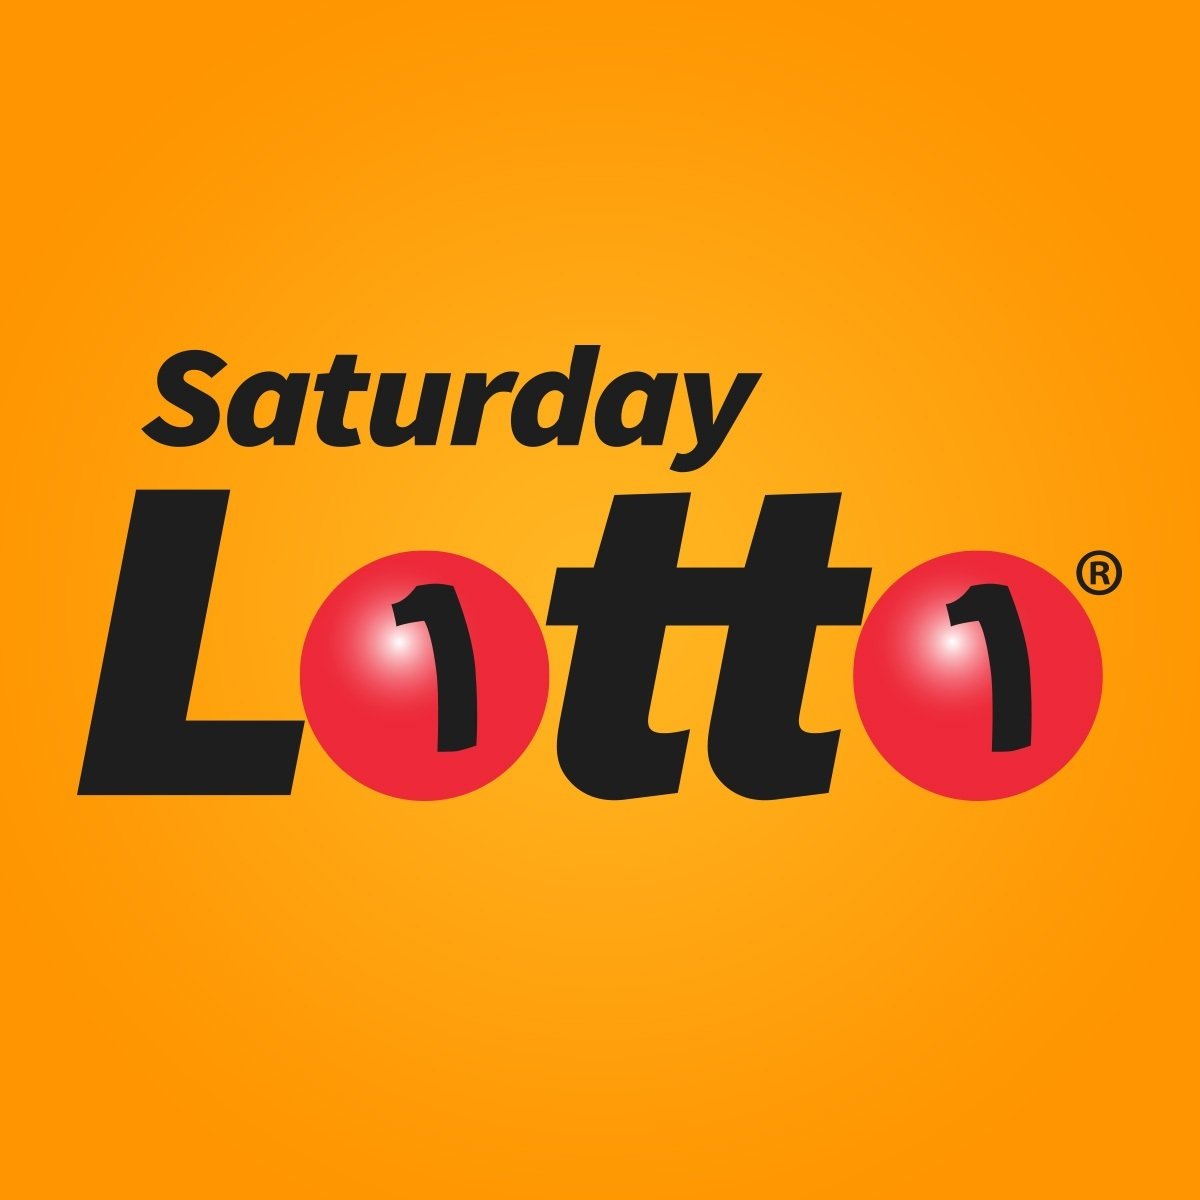 Saturdays Lotto